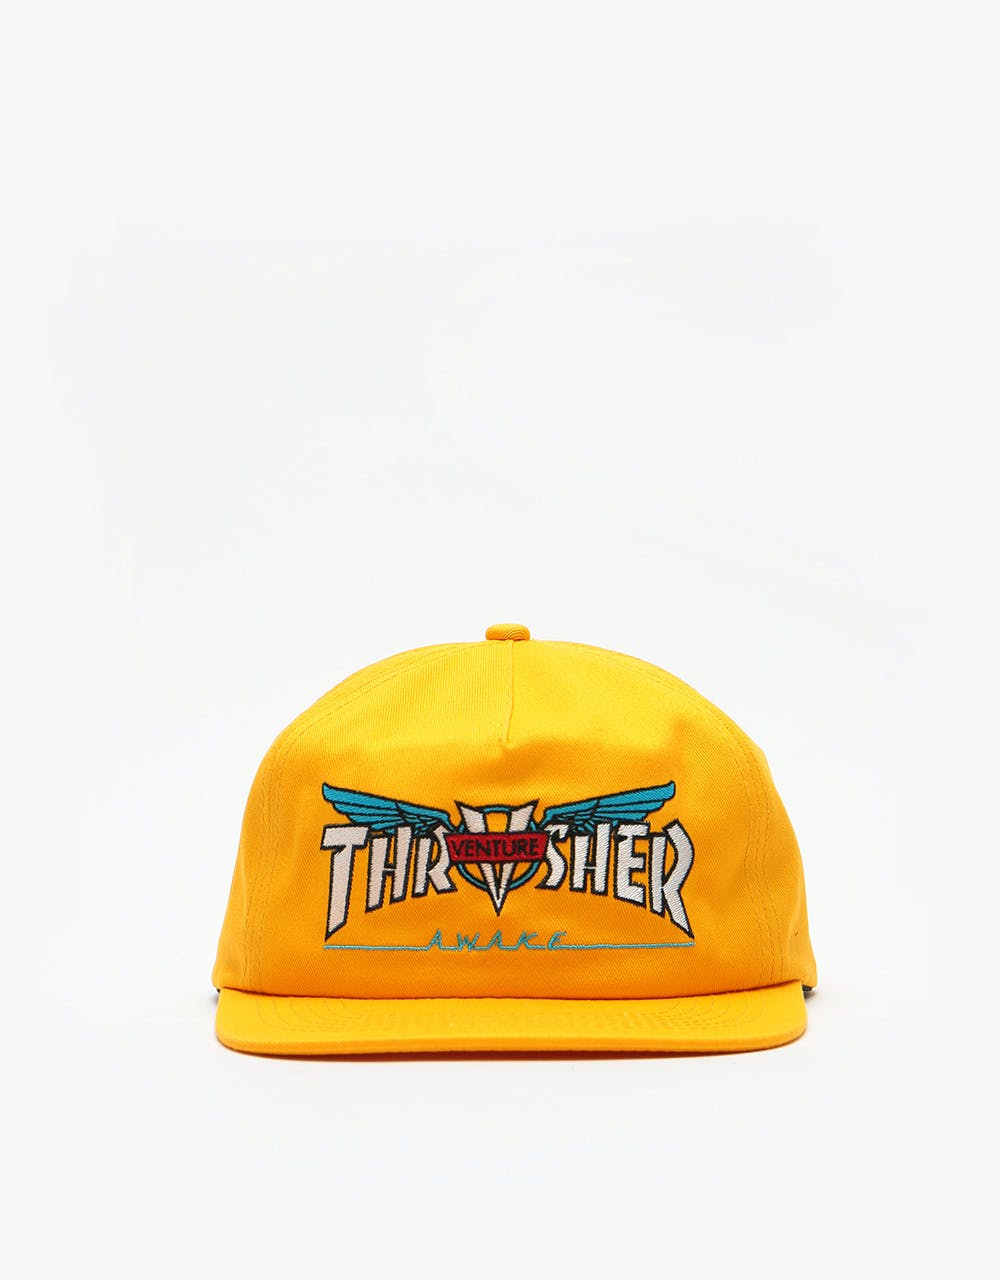 Thrasher x Venture Collab Snapback Cap - Gold